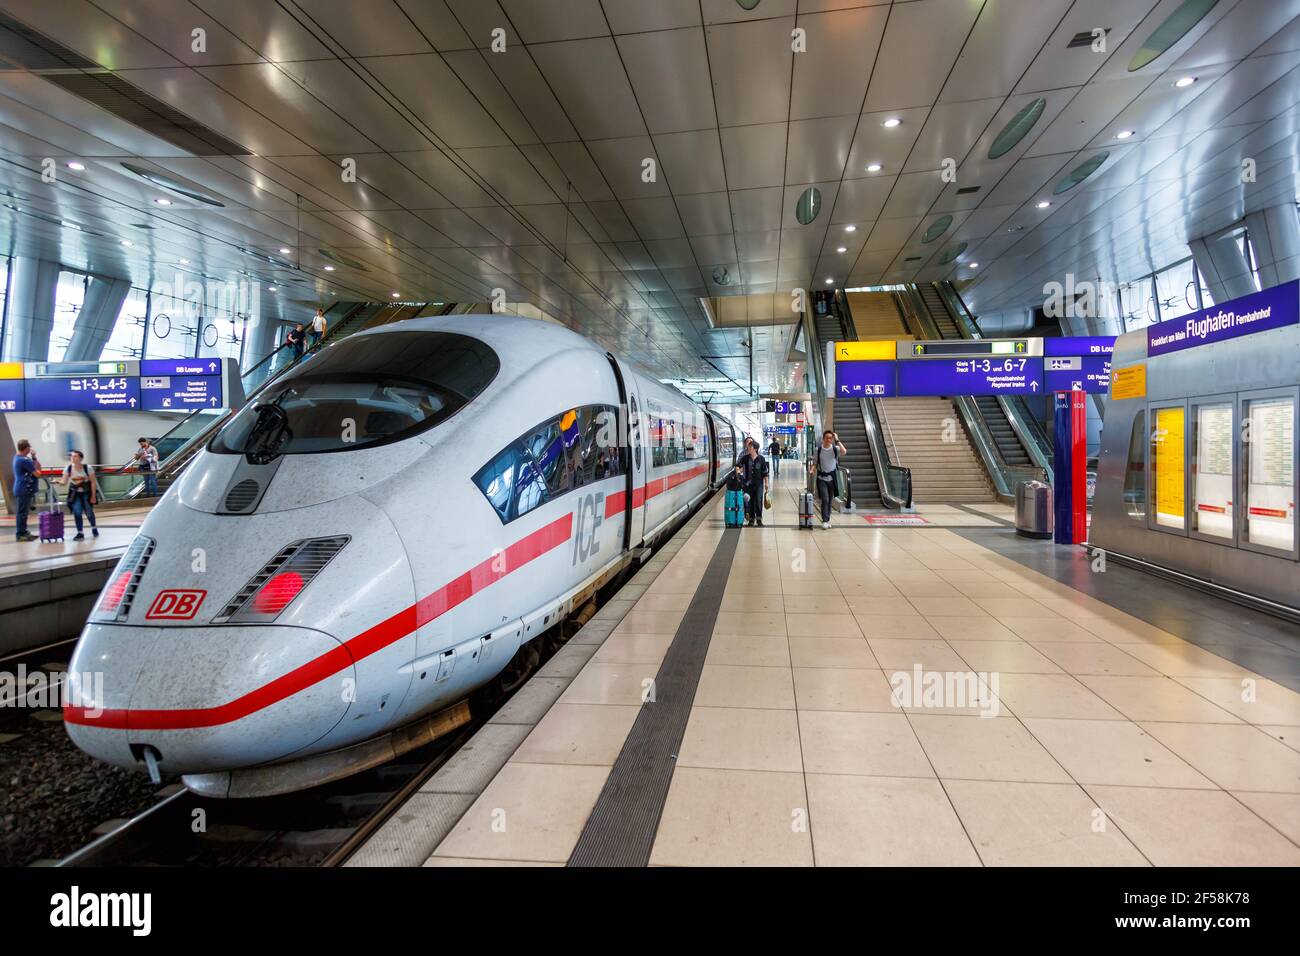 Frankfurt, Germany - May 27, 2018: ICE high speed train at Frankfurt airport railway station in Germany. Stock Photo